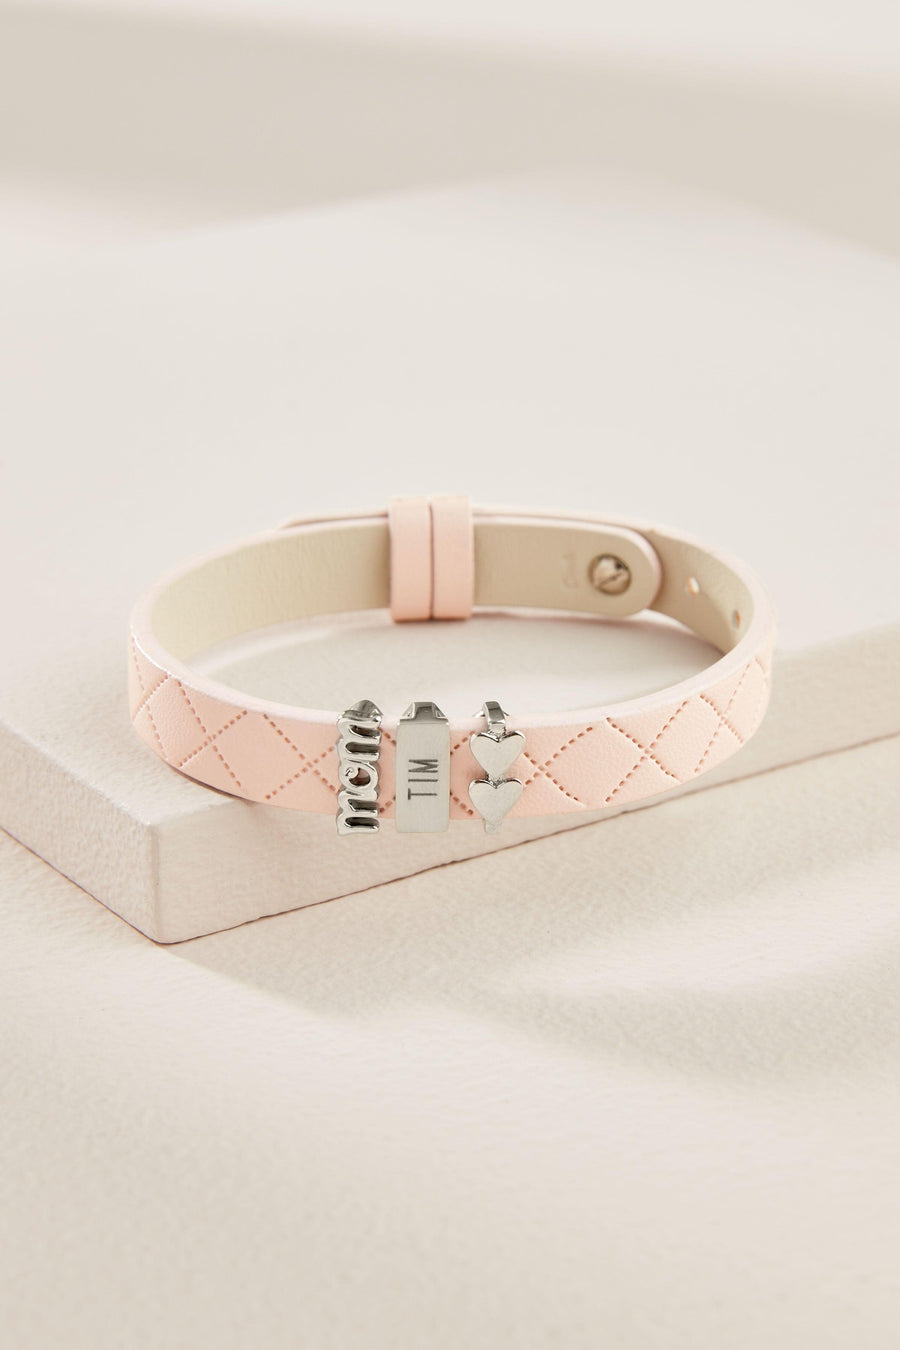 Louis Vuitton Keep It Bracelet (Pink Leather)